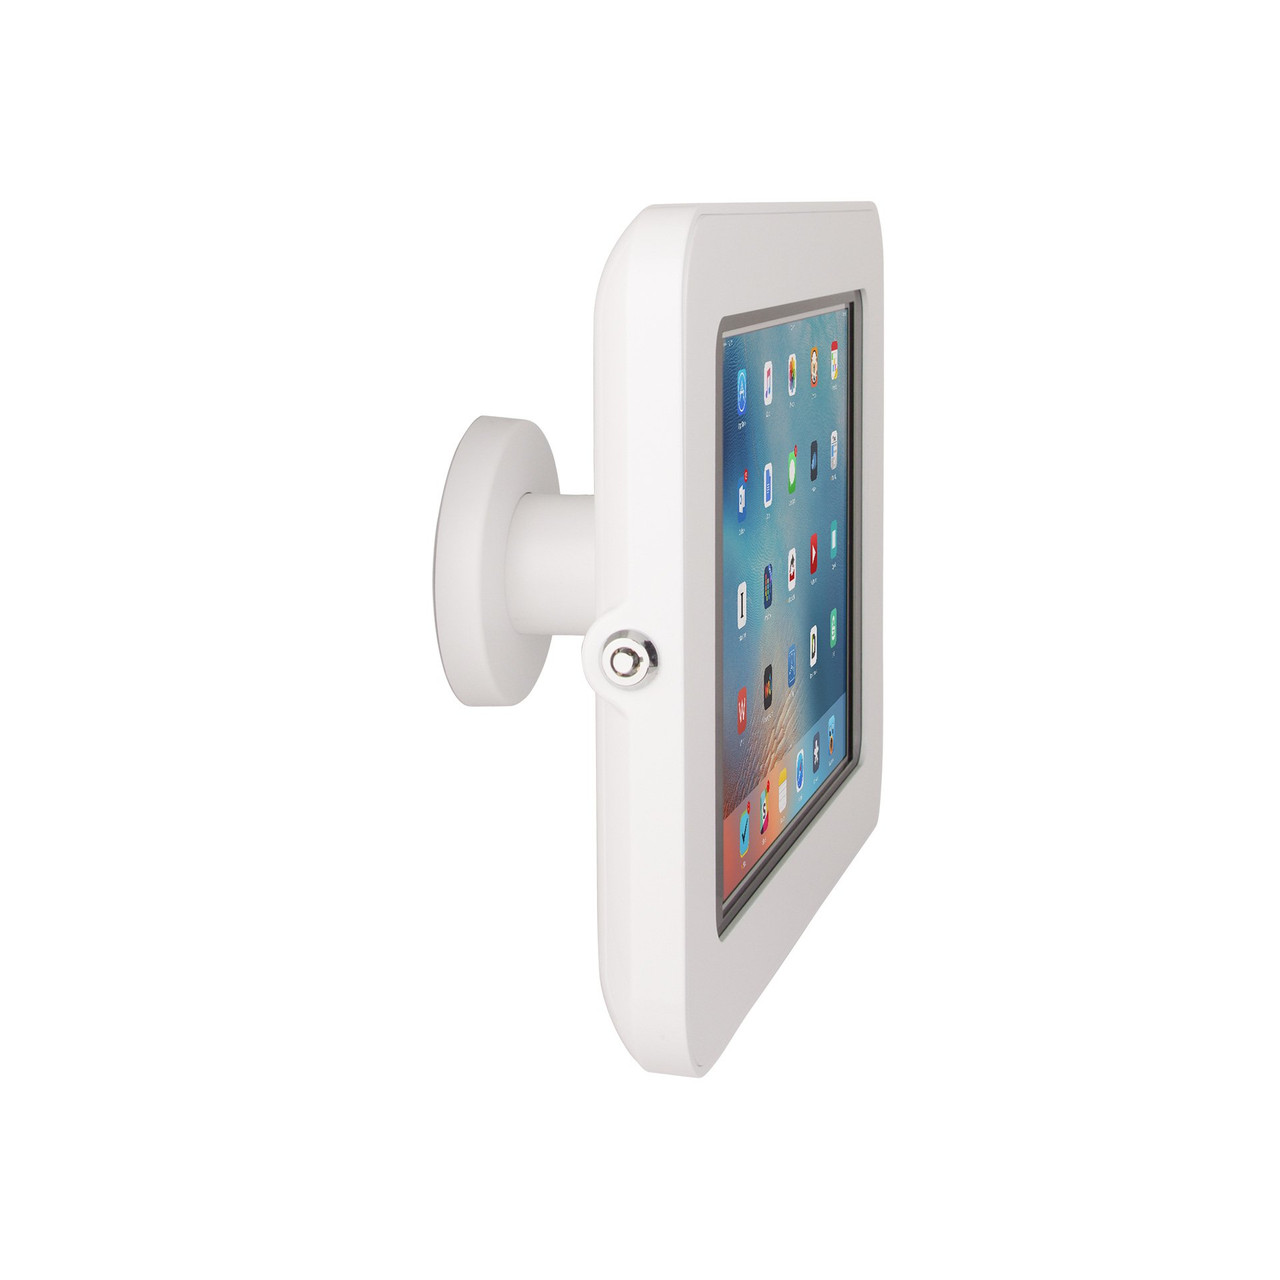 Elevate Mount Kiosk iPad Air (3rd Gen) Pro 10.5-inch (White )